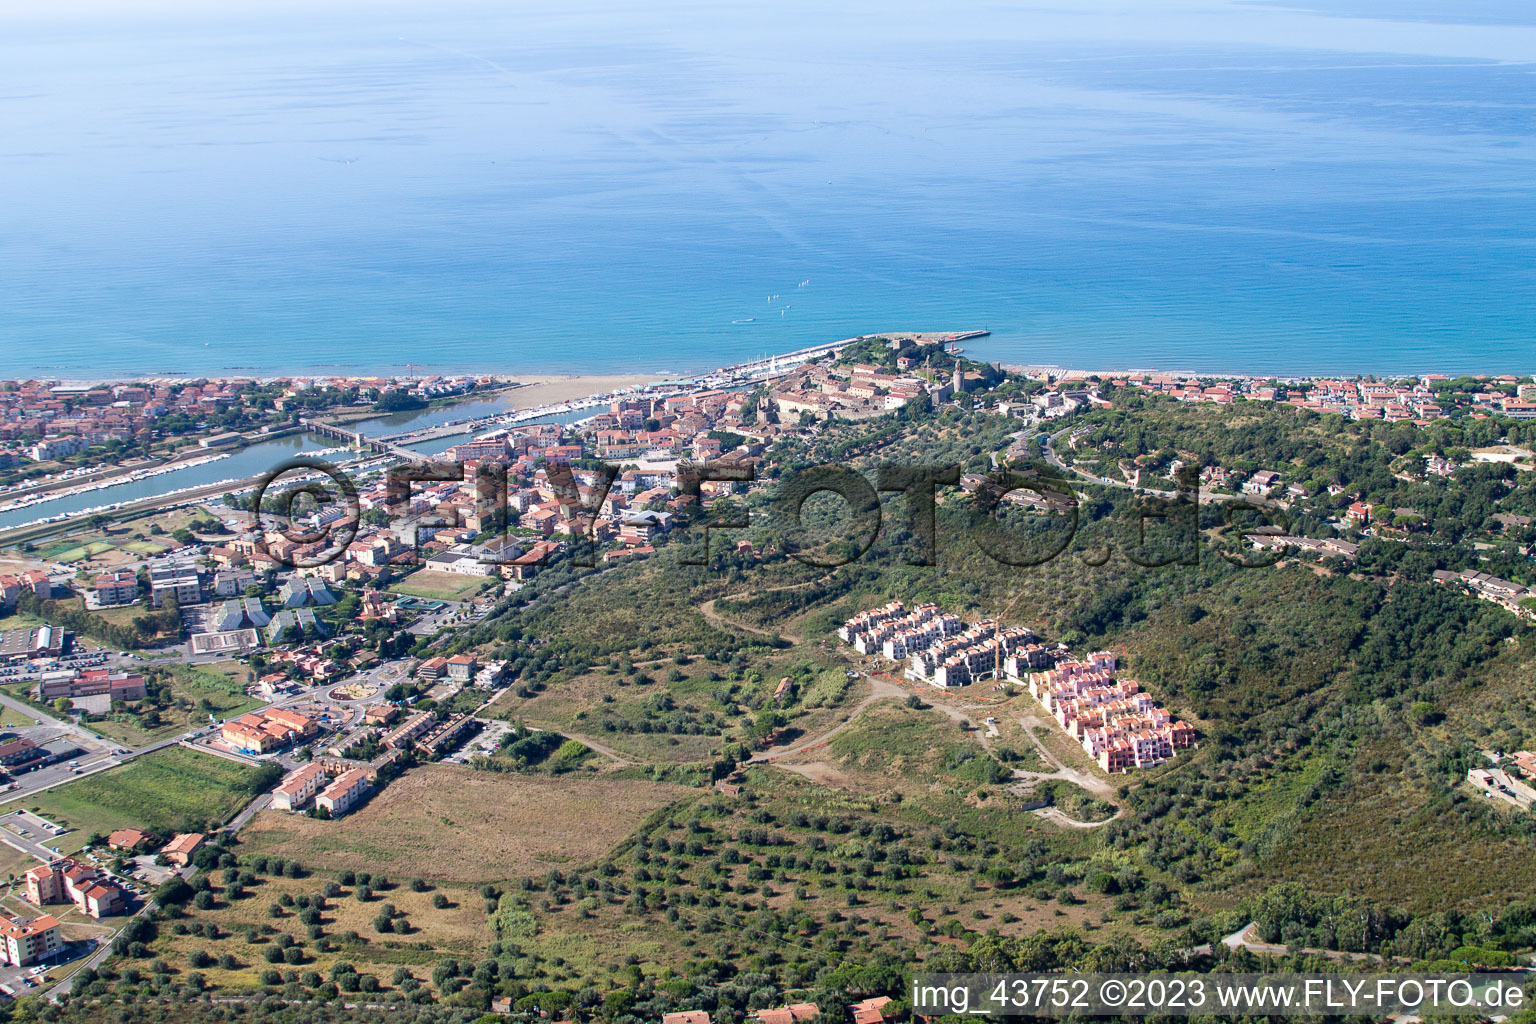 Luftaufnahme von Castiglione della Pescaia im Bundesland Toscana, Italien